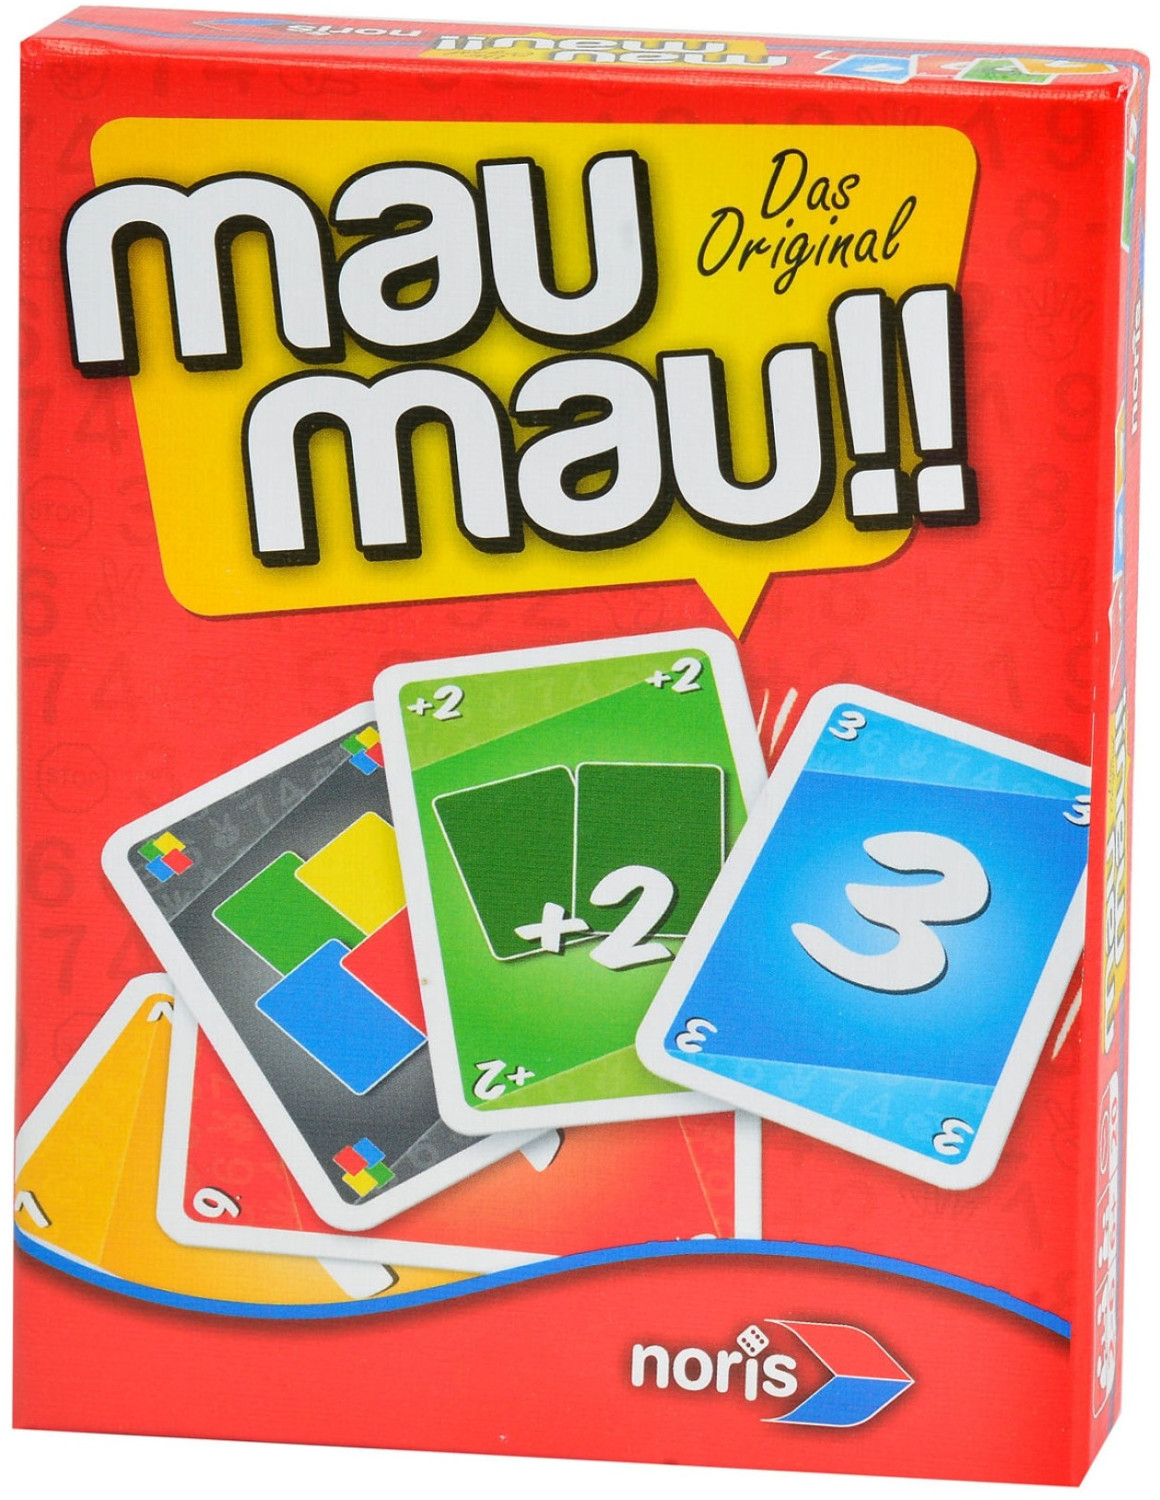 Noris Original Mau Mau 